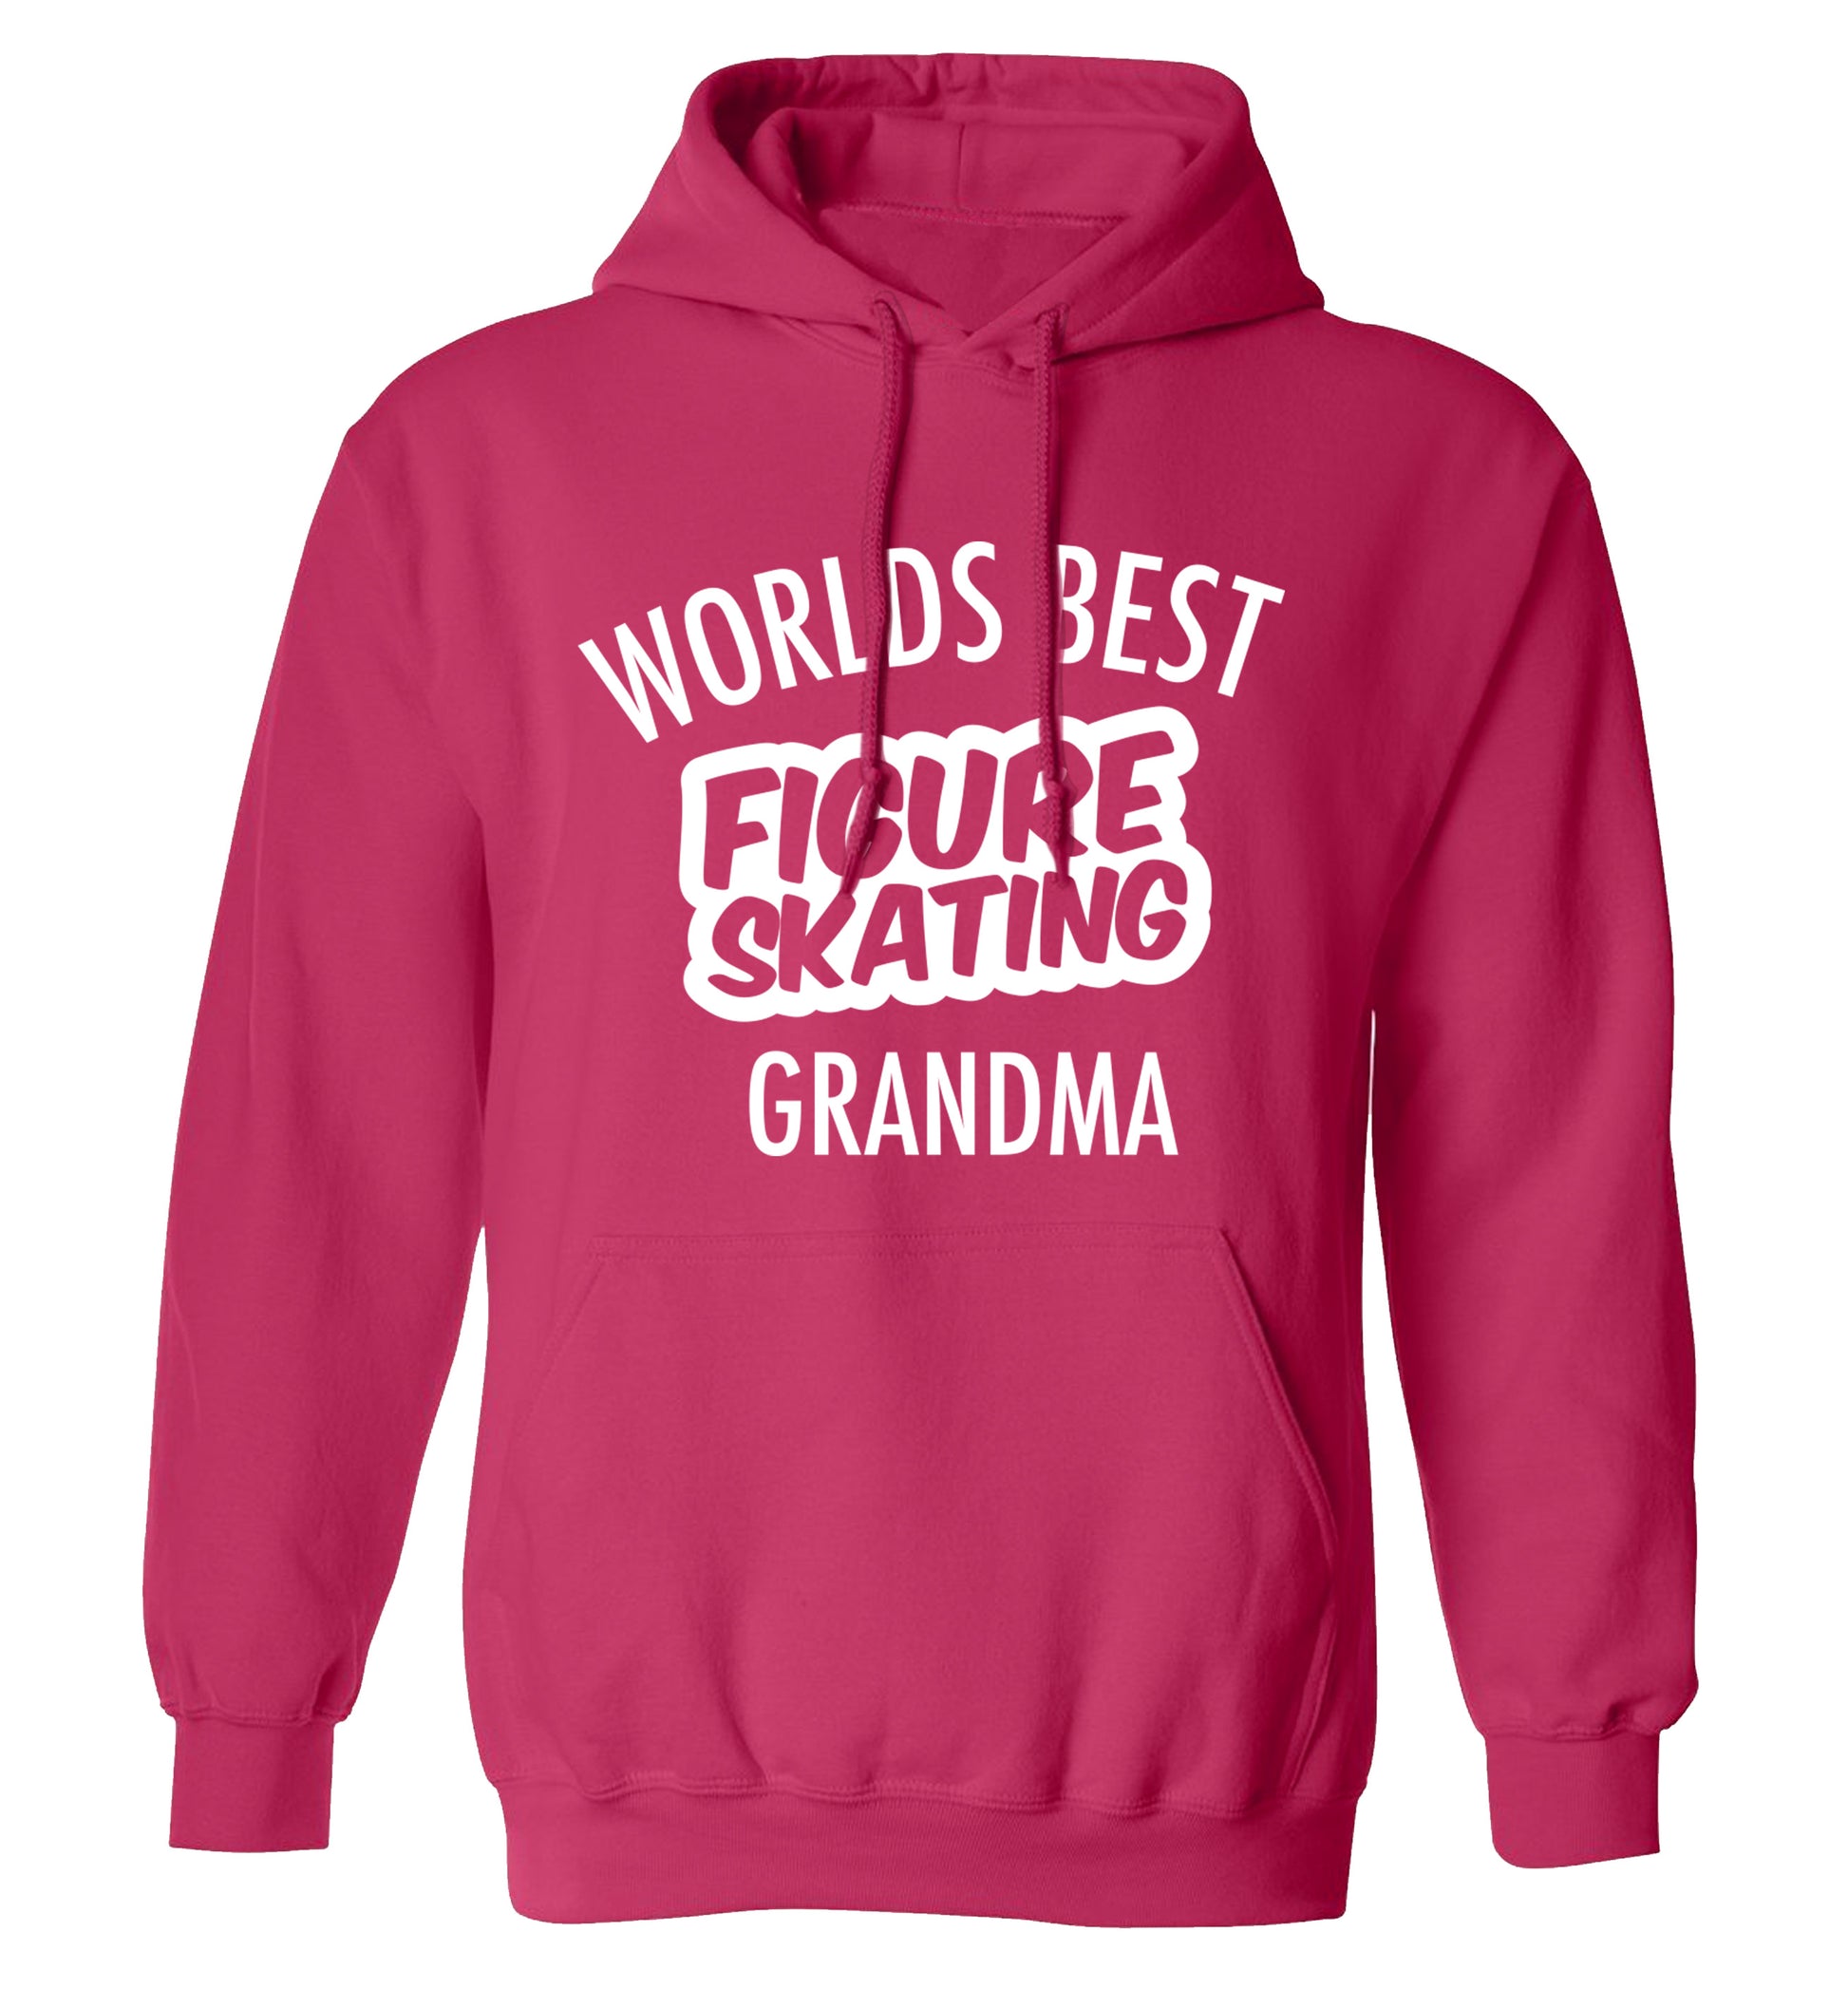 Worlds best figure skating grandma adults unisexpink hoodie 2XL